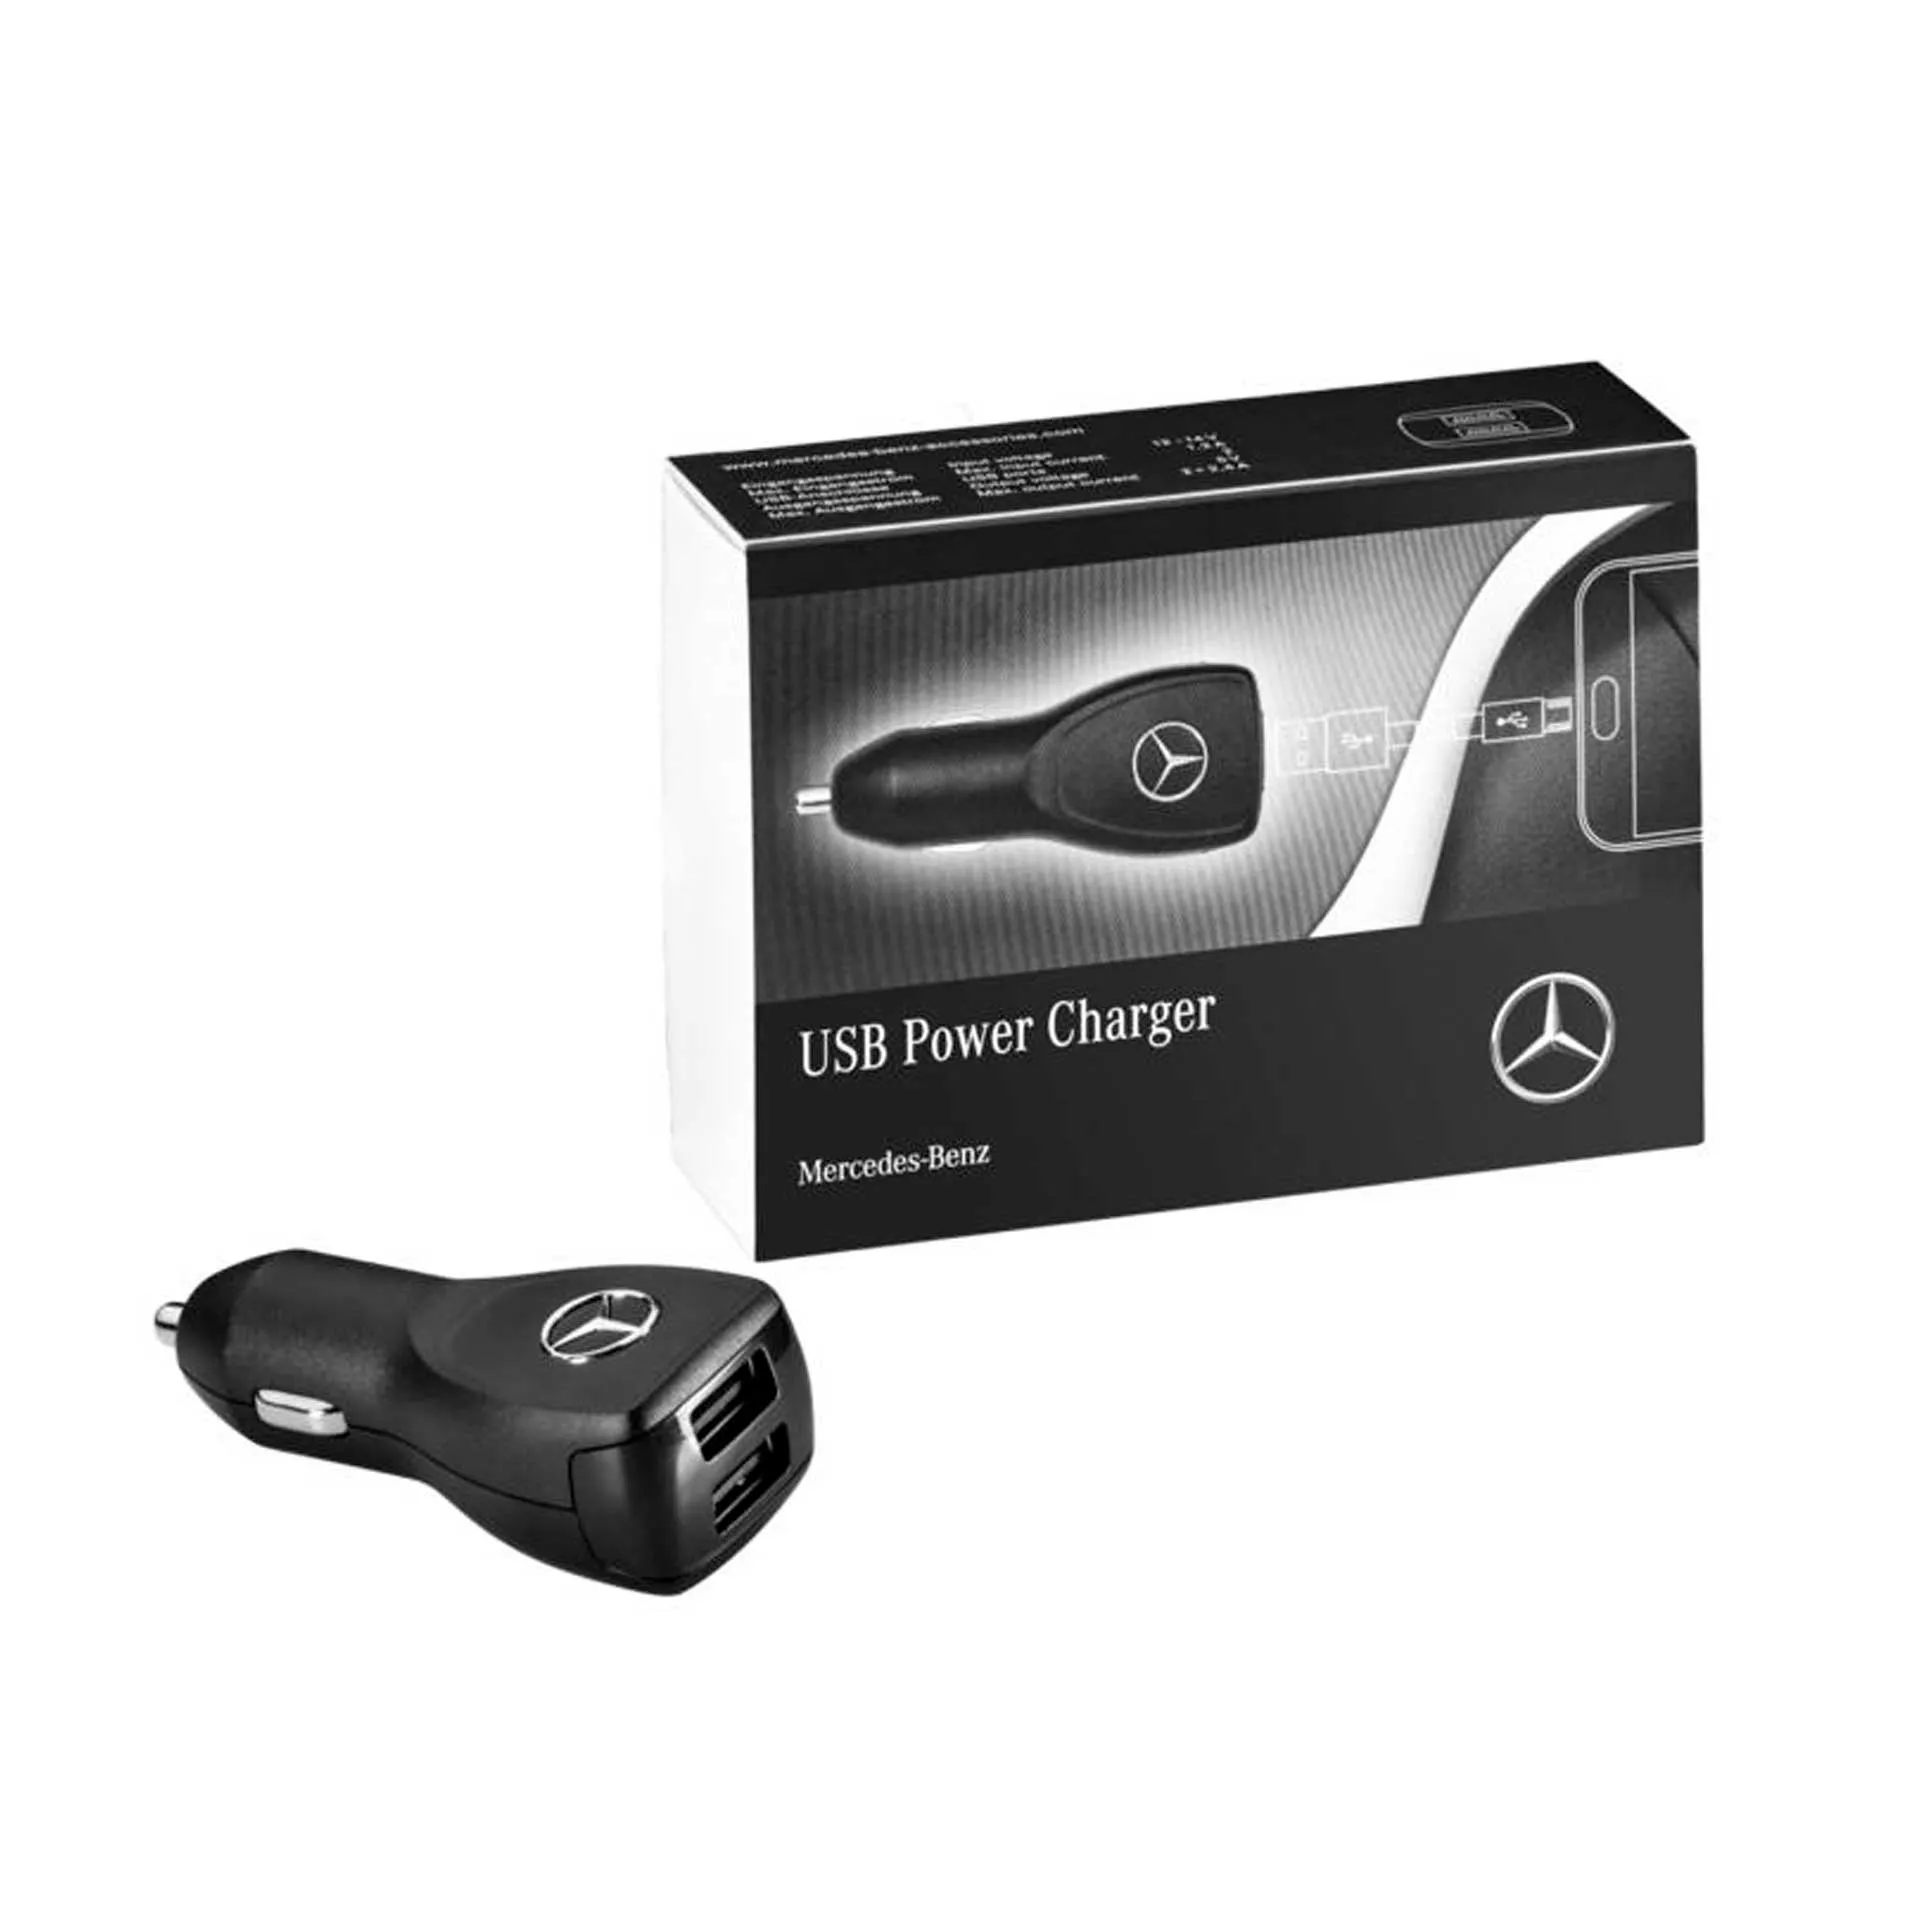 Mercedes-Benz USB Power Charger A2138200803